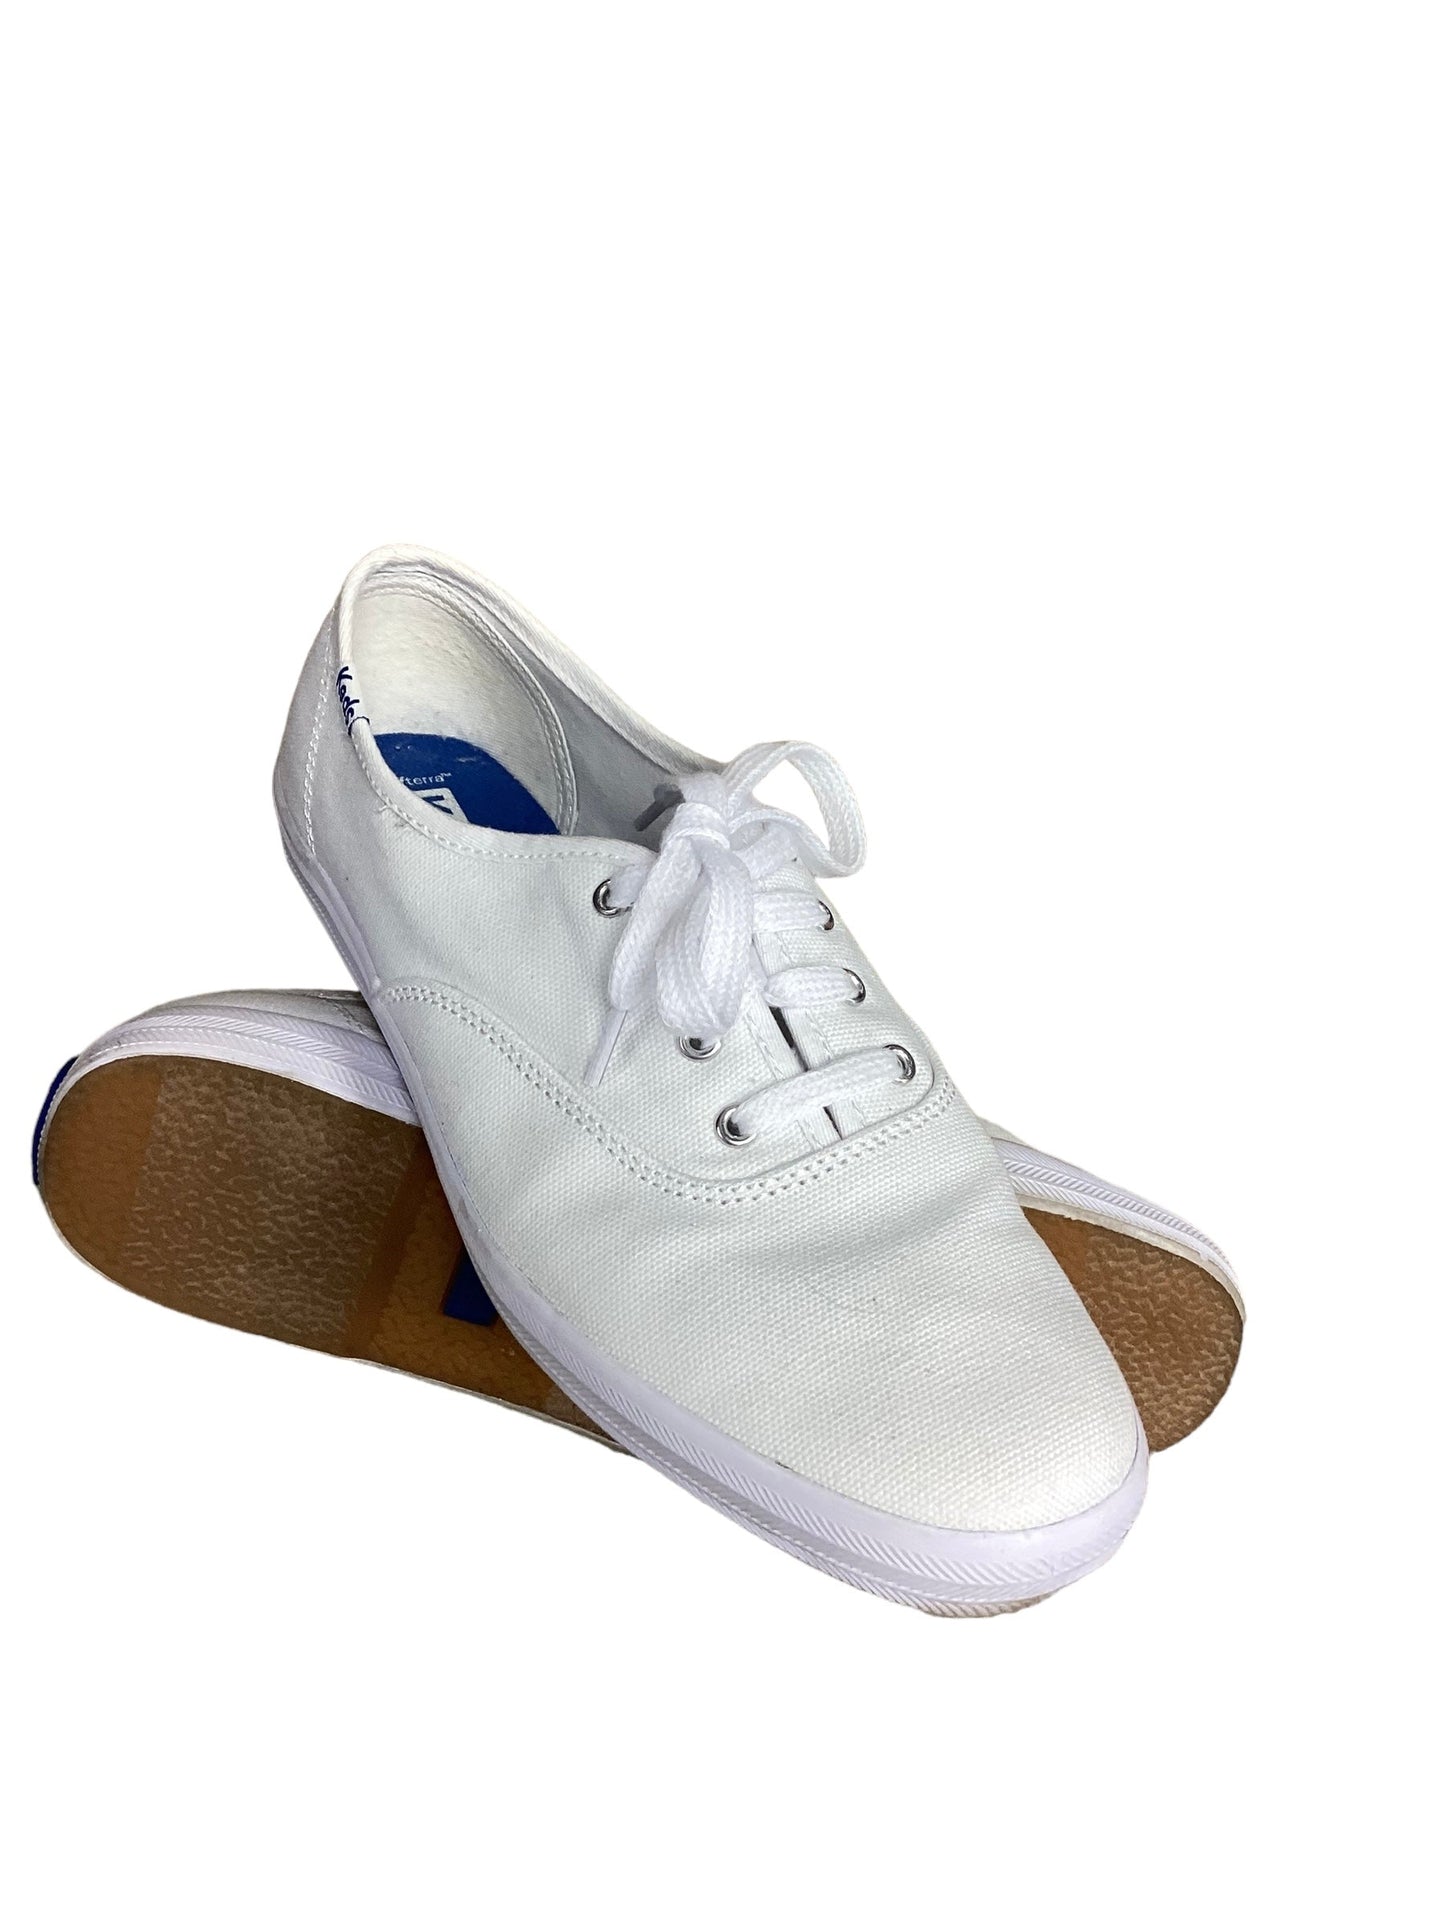 White Shoes Flats Keds, Size 7.5